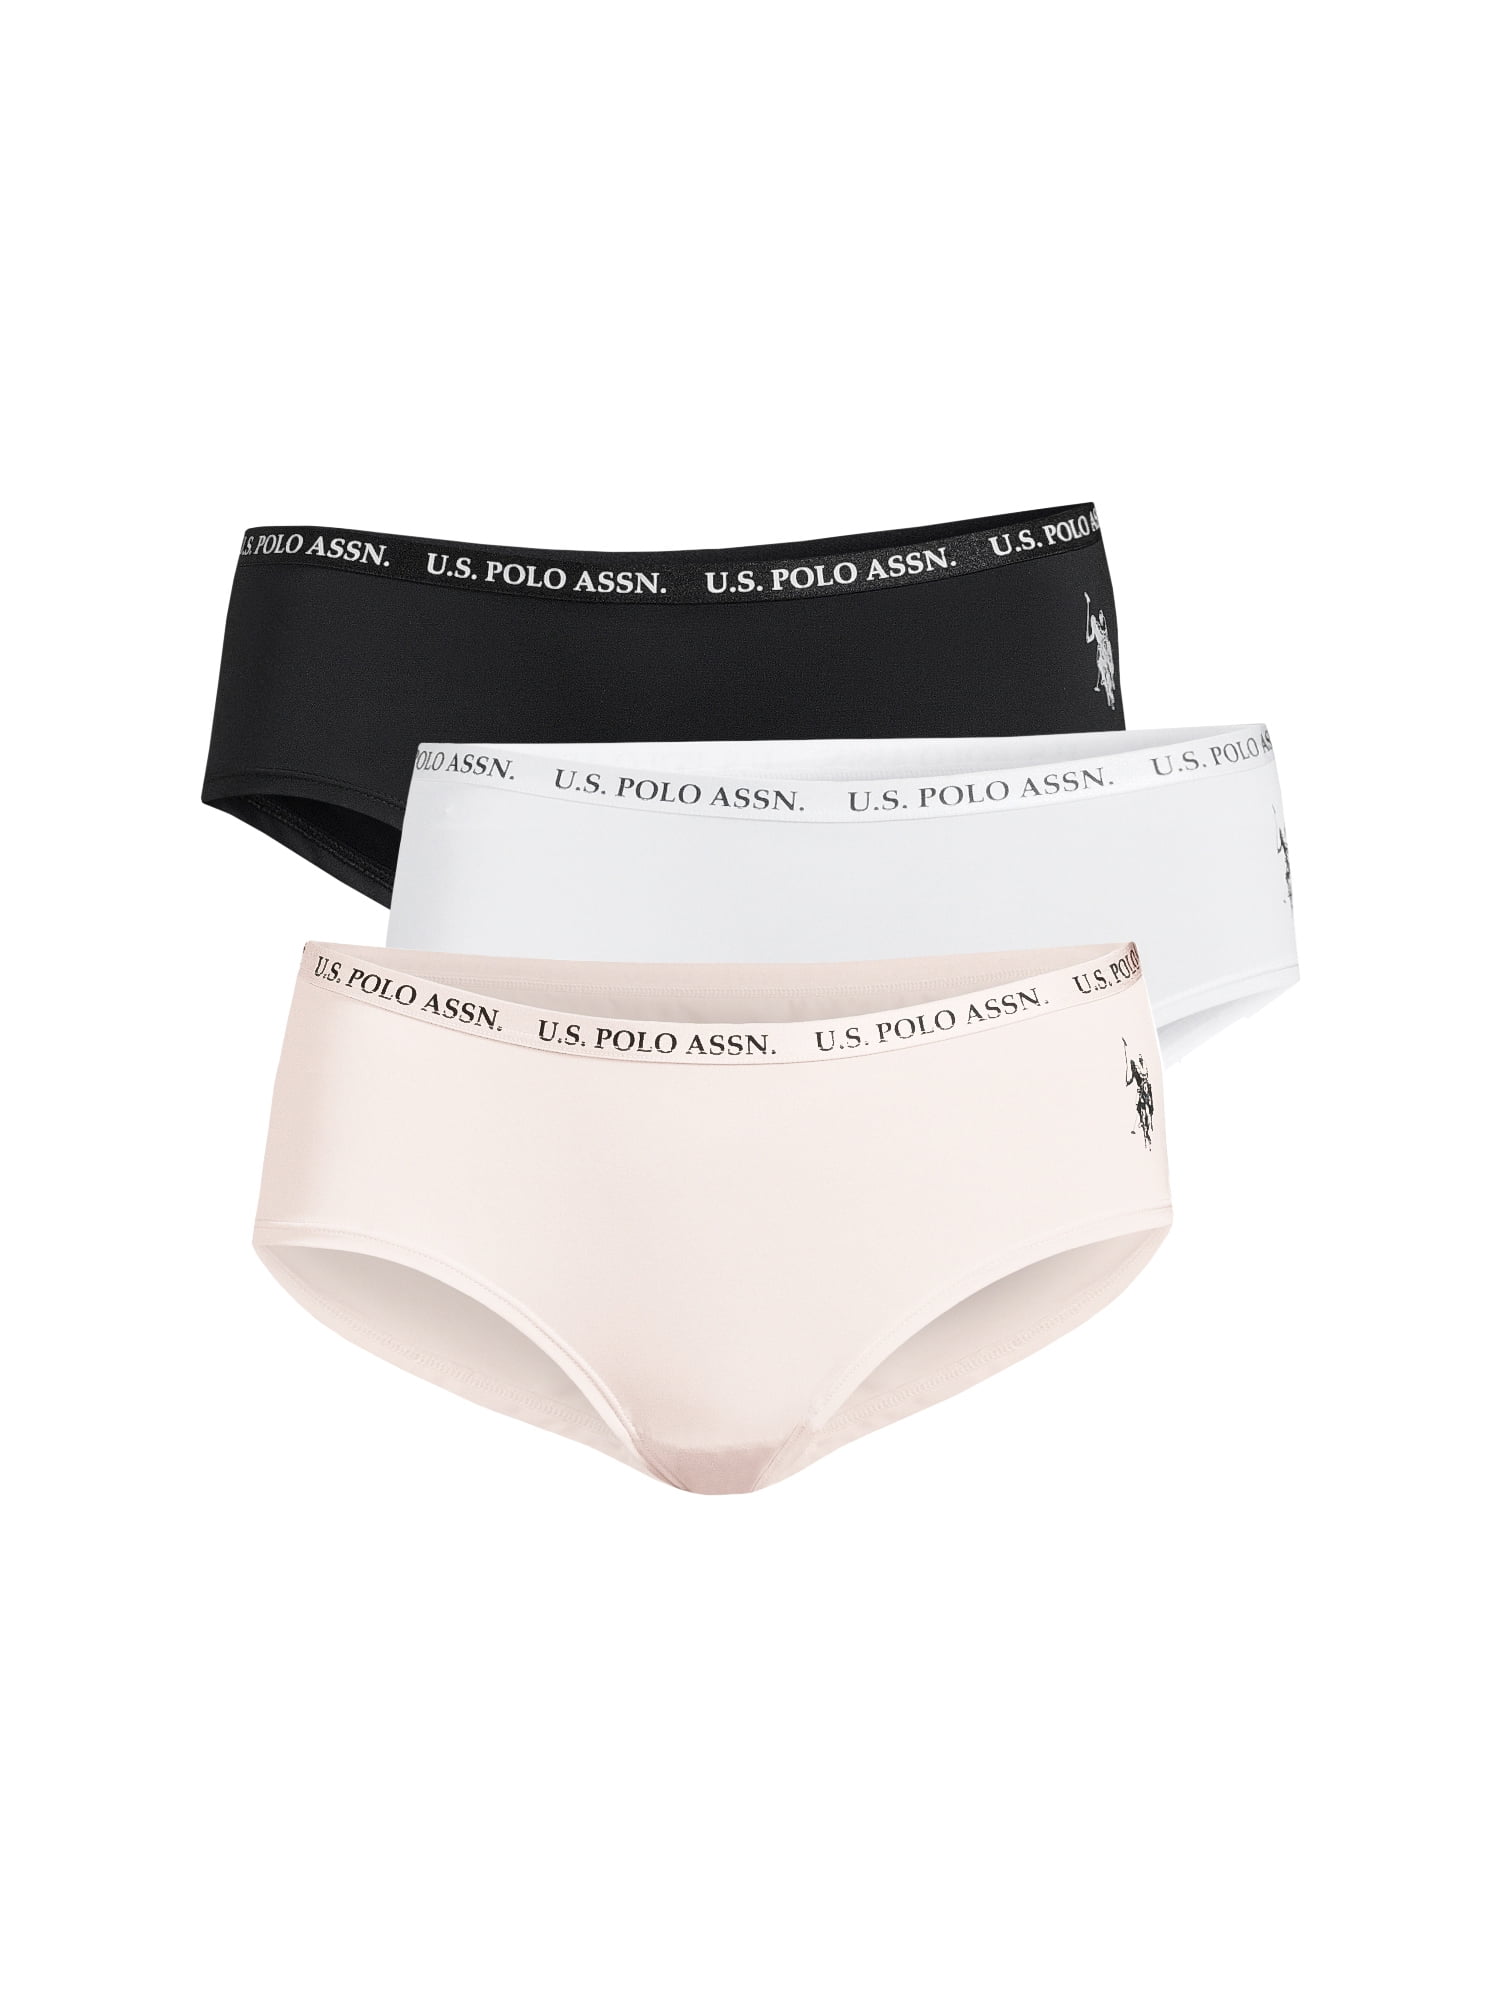 U.S. Polo Assn. Women's Microfiber Hipster Panty Underwear, 3-Pack